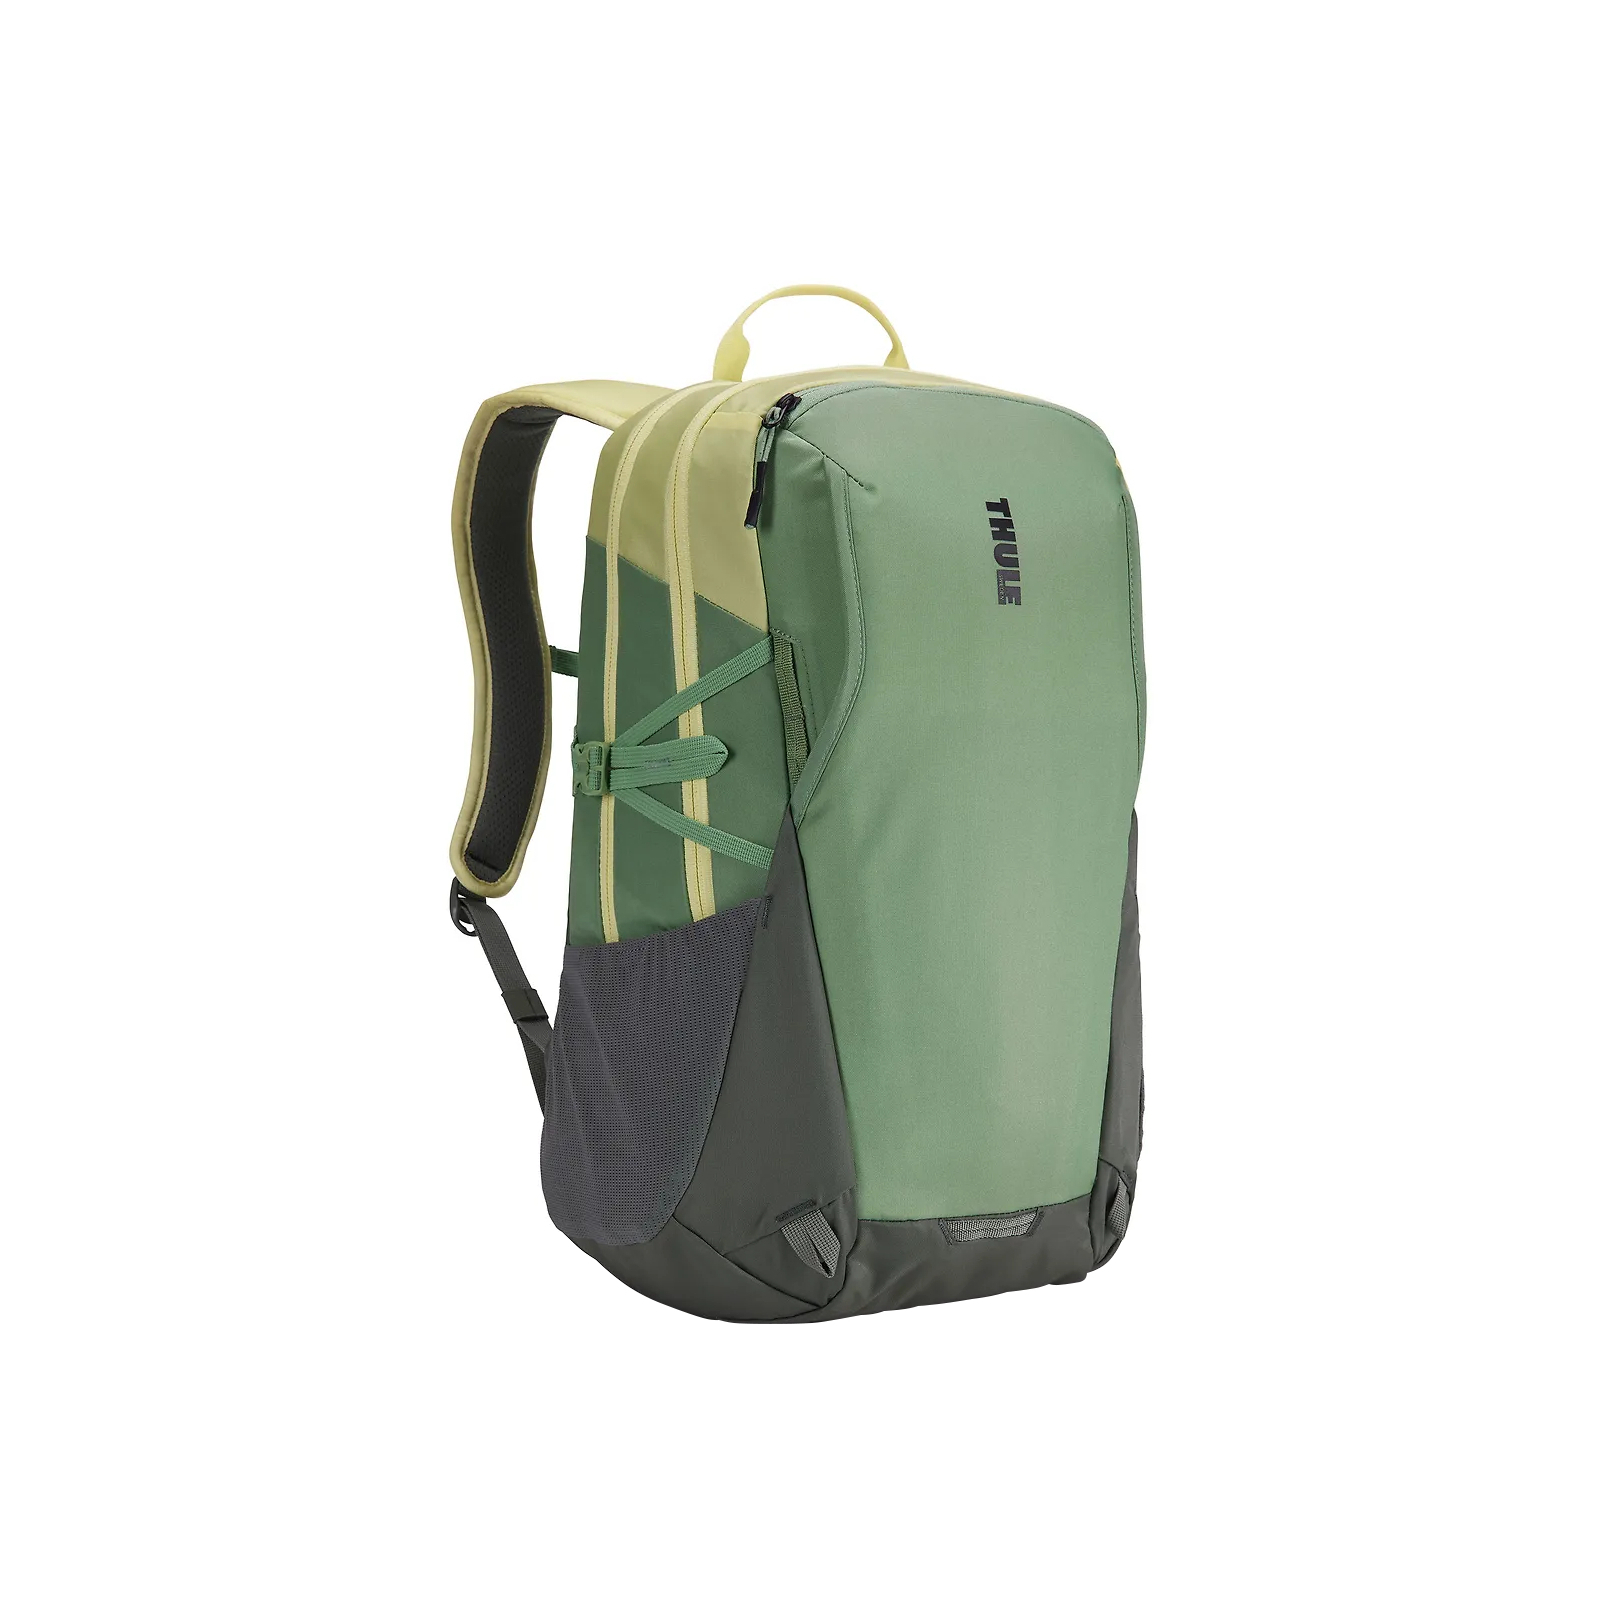 Рюкзак для ноутбука Thule 15.6" EnRoute 23L TEBP4216 Black) (3204841)